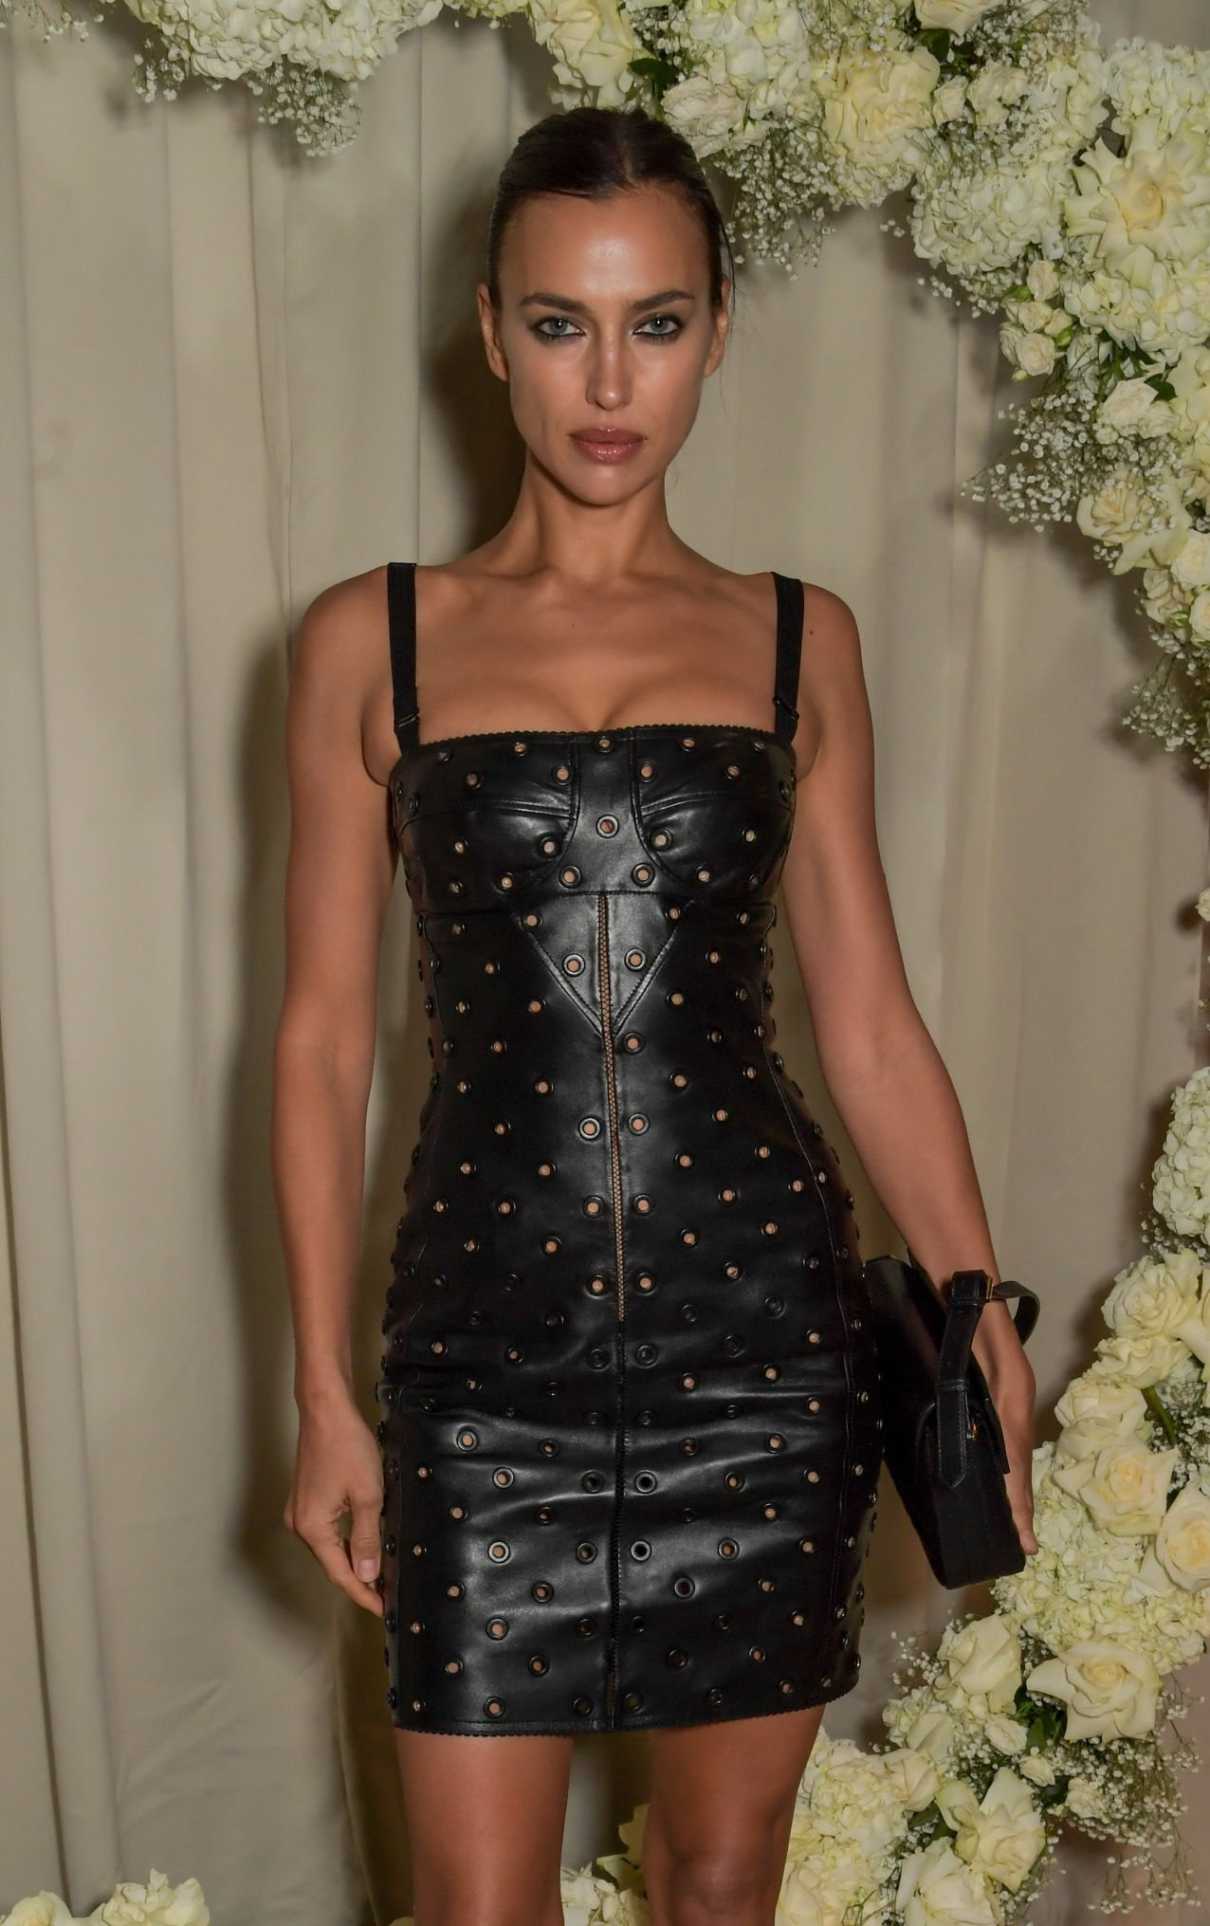 Irina Shayk in a Leather Black Dress